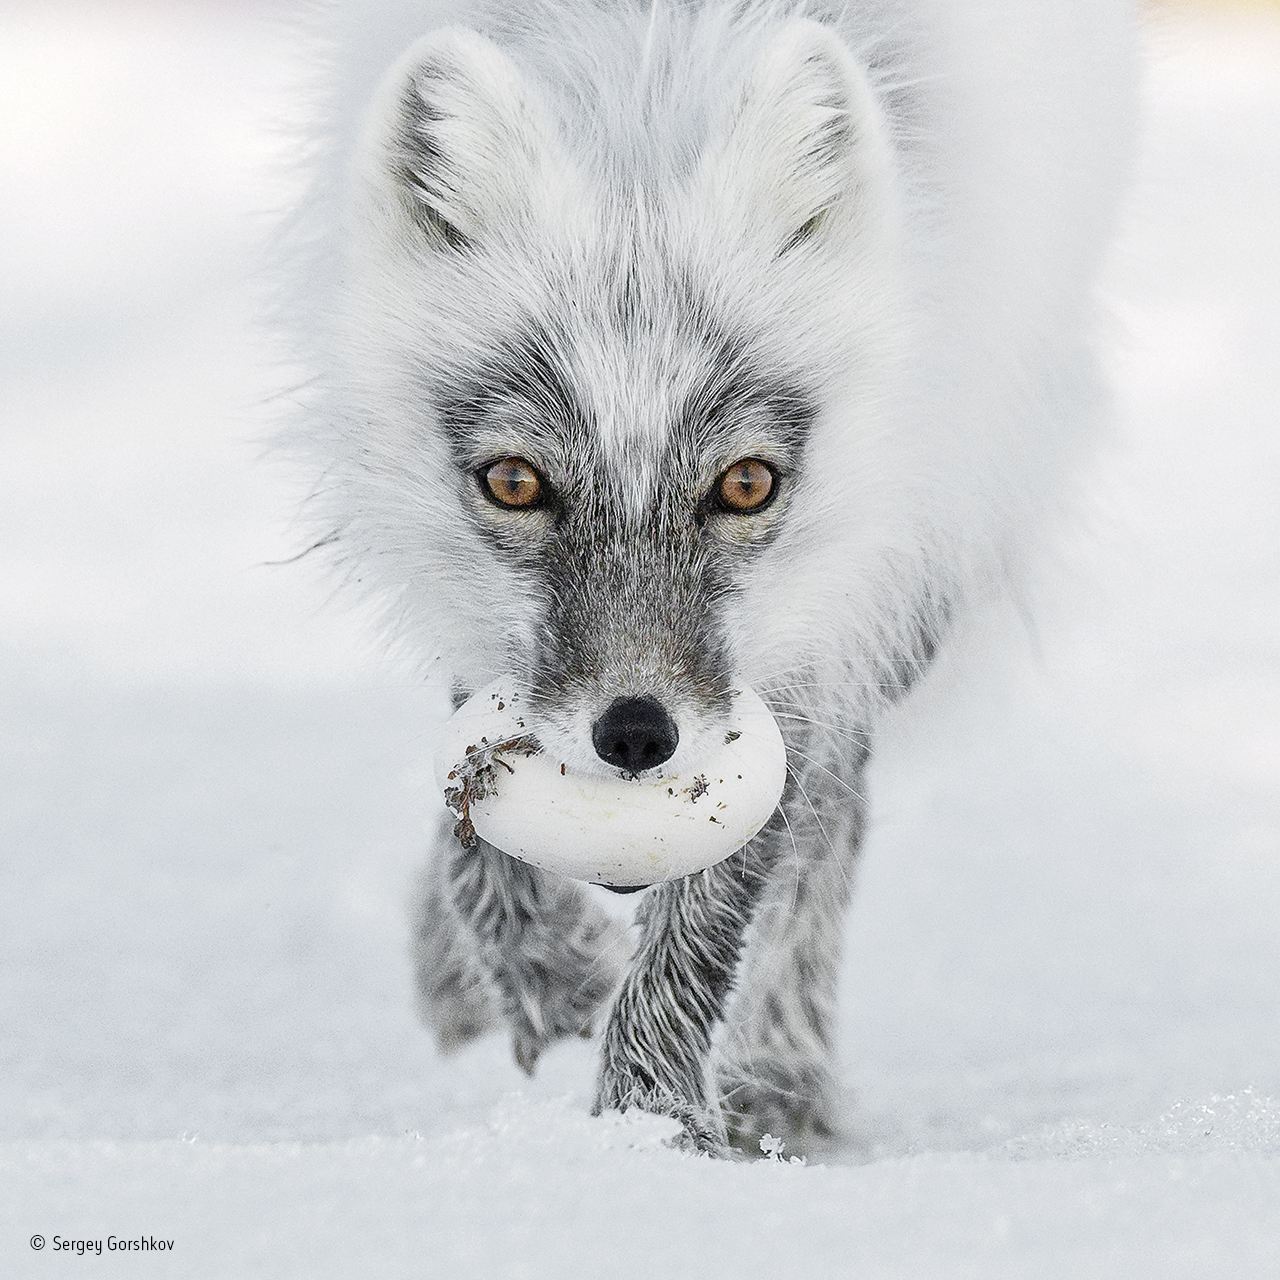 An Arctic fox carries a snow goose egg.